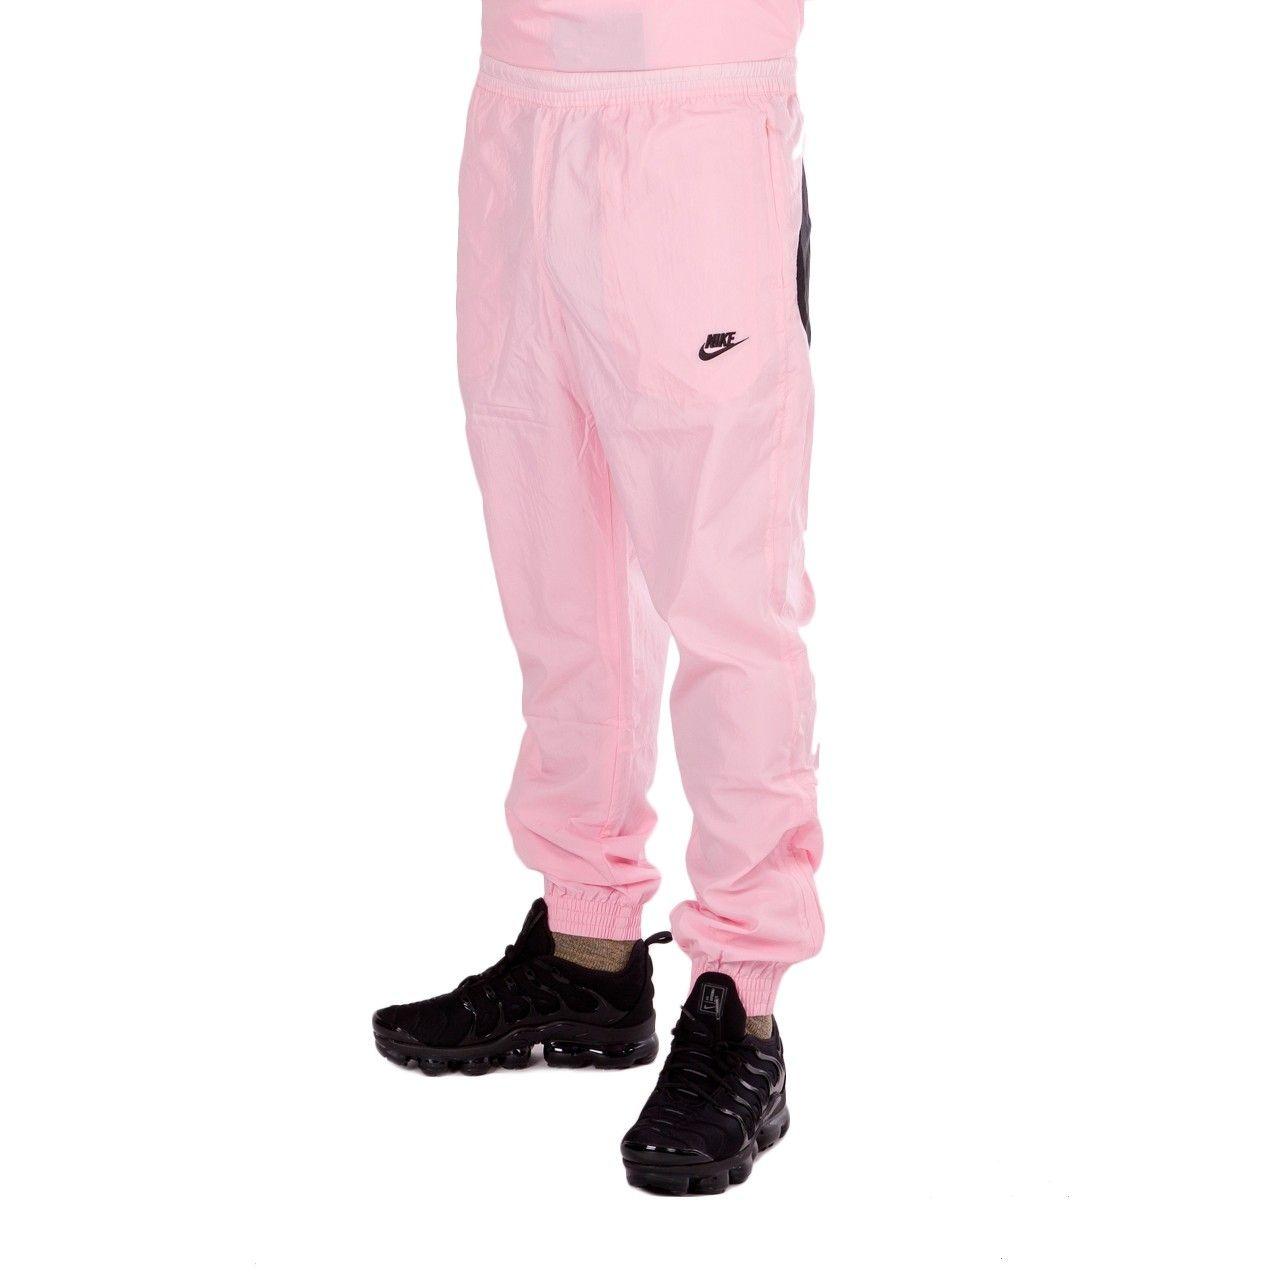 Pink and Black Nike Logo - Nike NSW Swoosh Woven Pants (Pink / Black) AJ2300-686